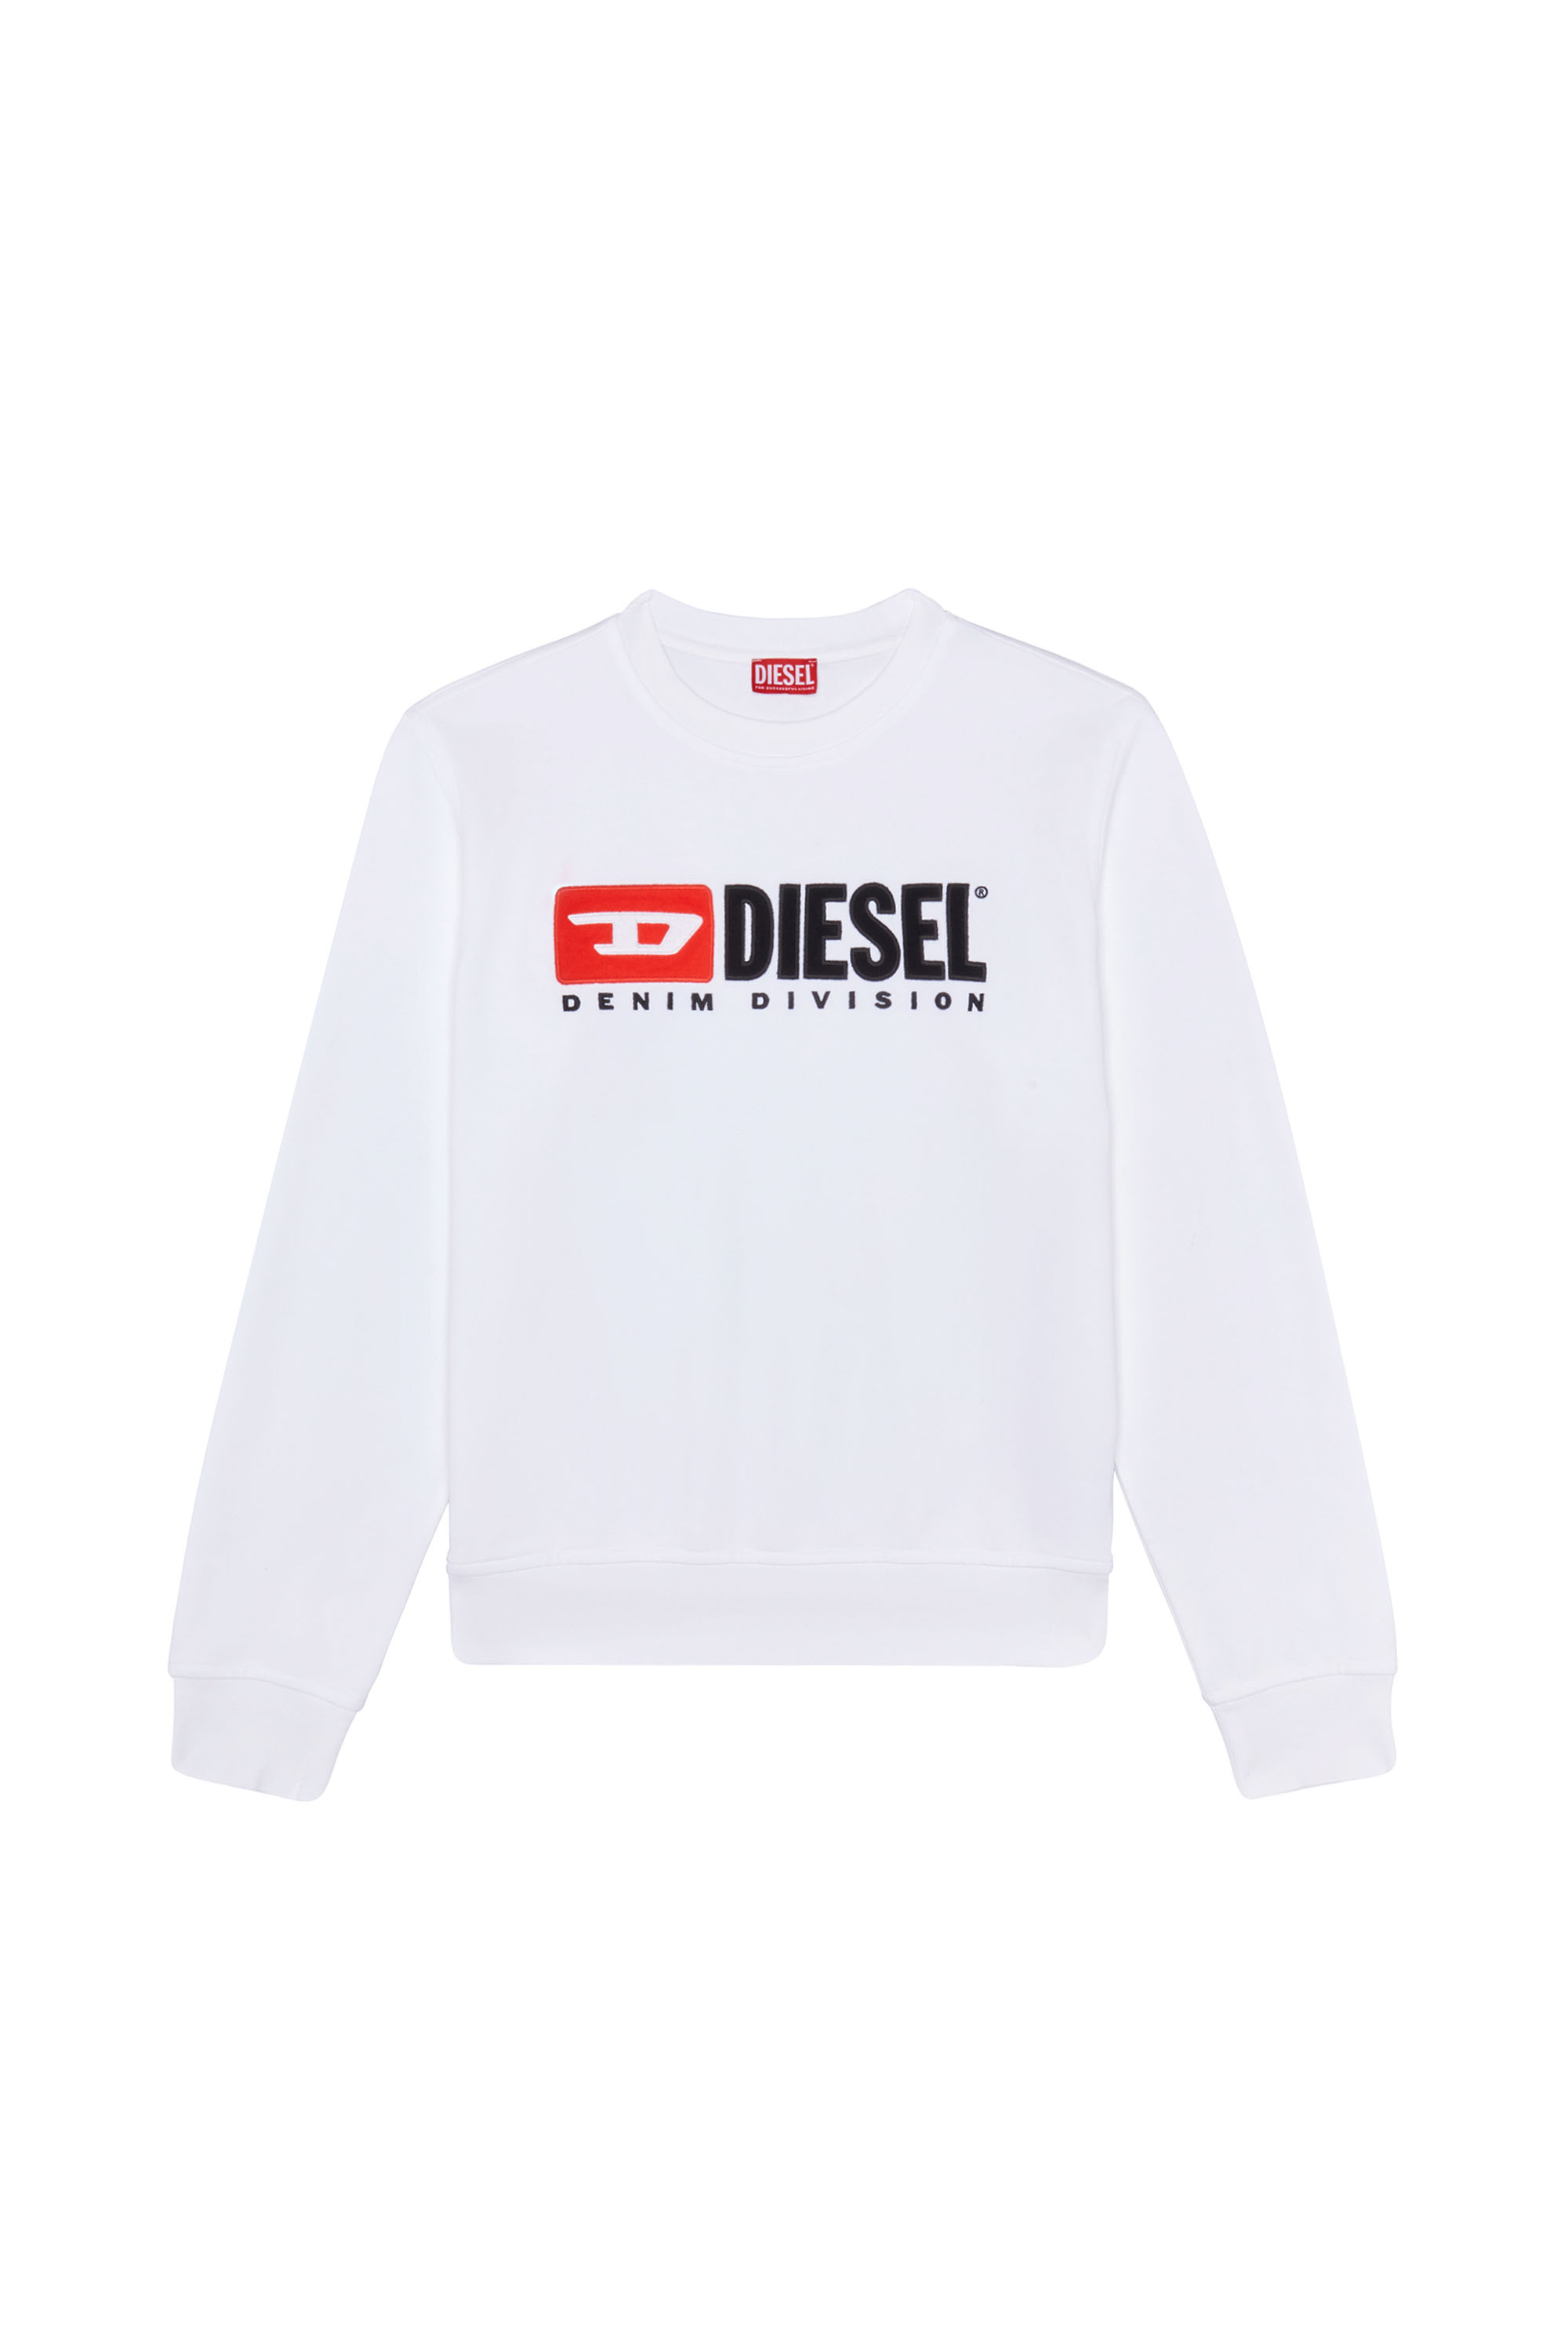 Diesel - S-GINN-DIV, Bianco - Image 1